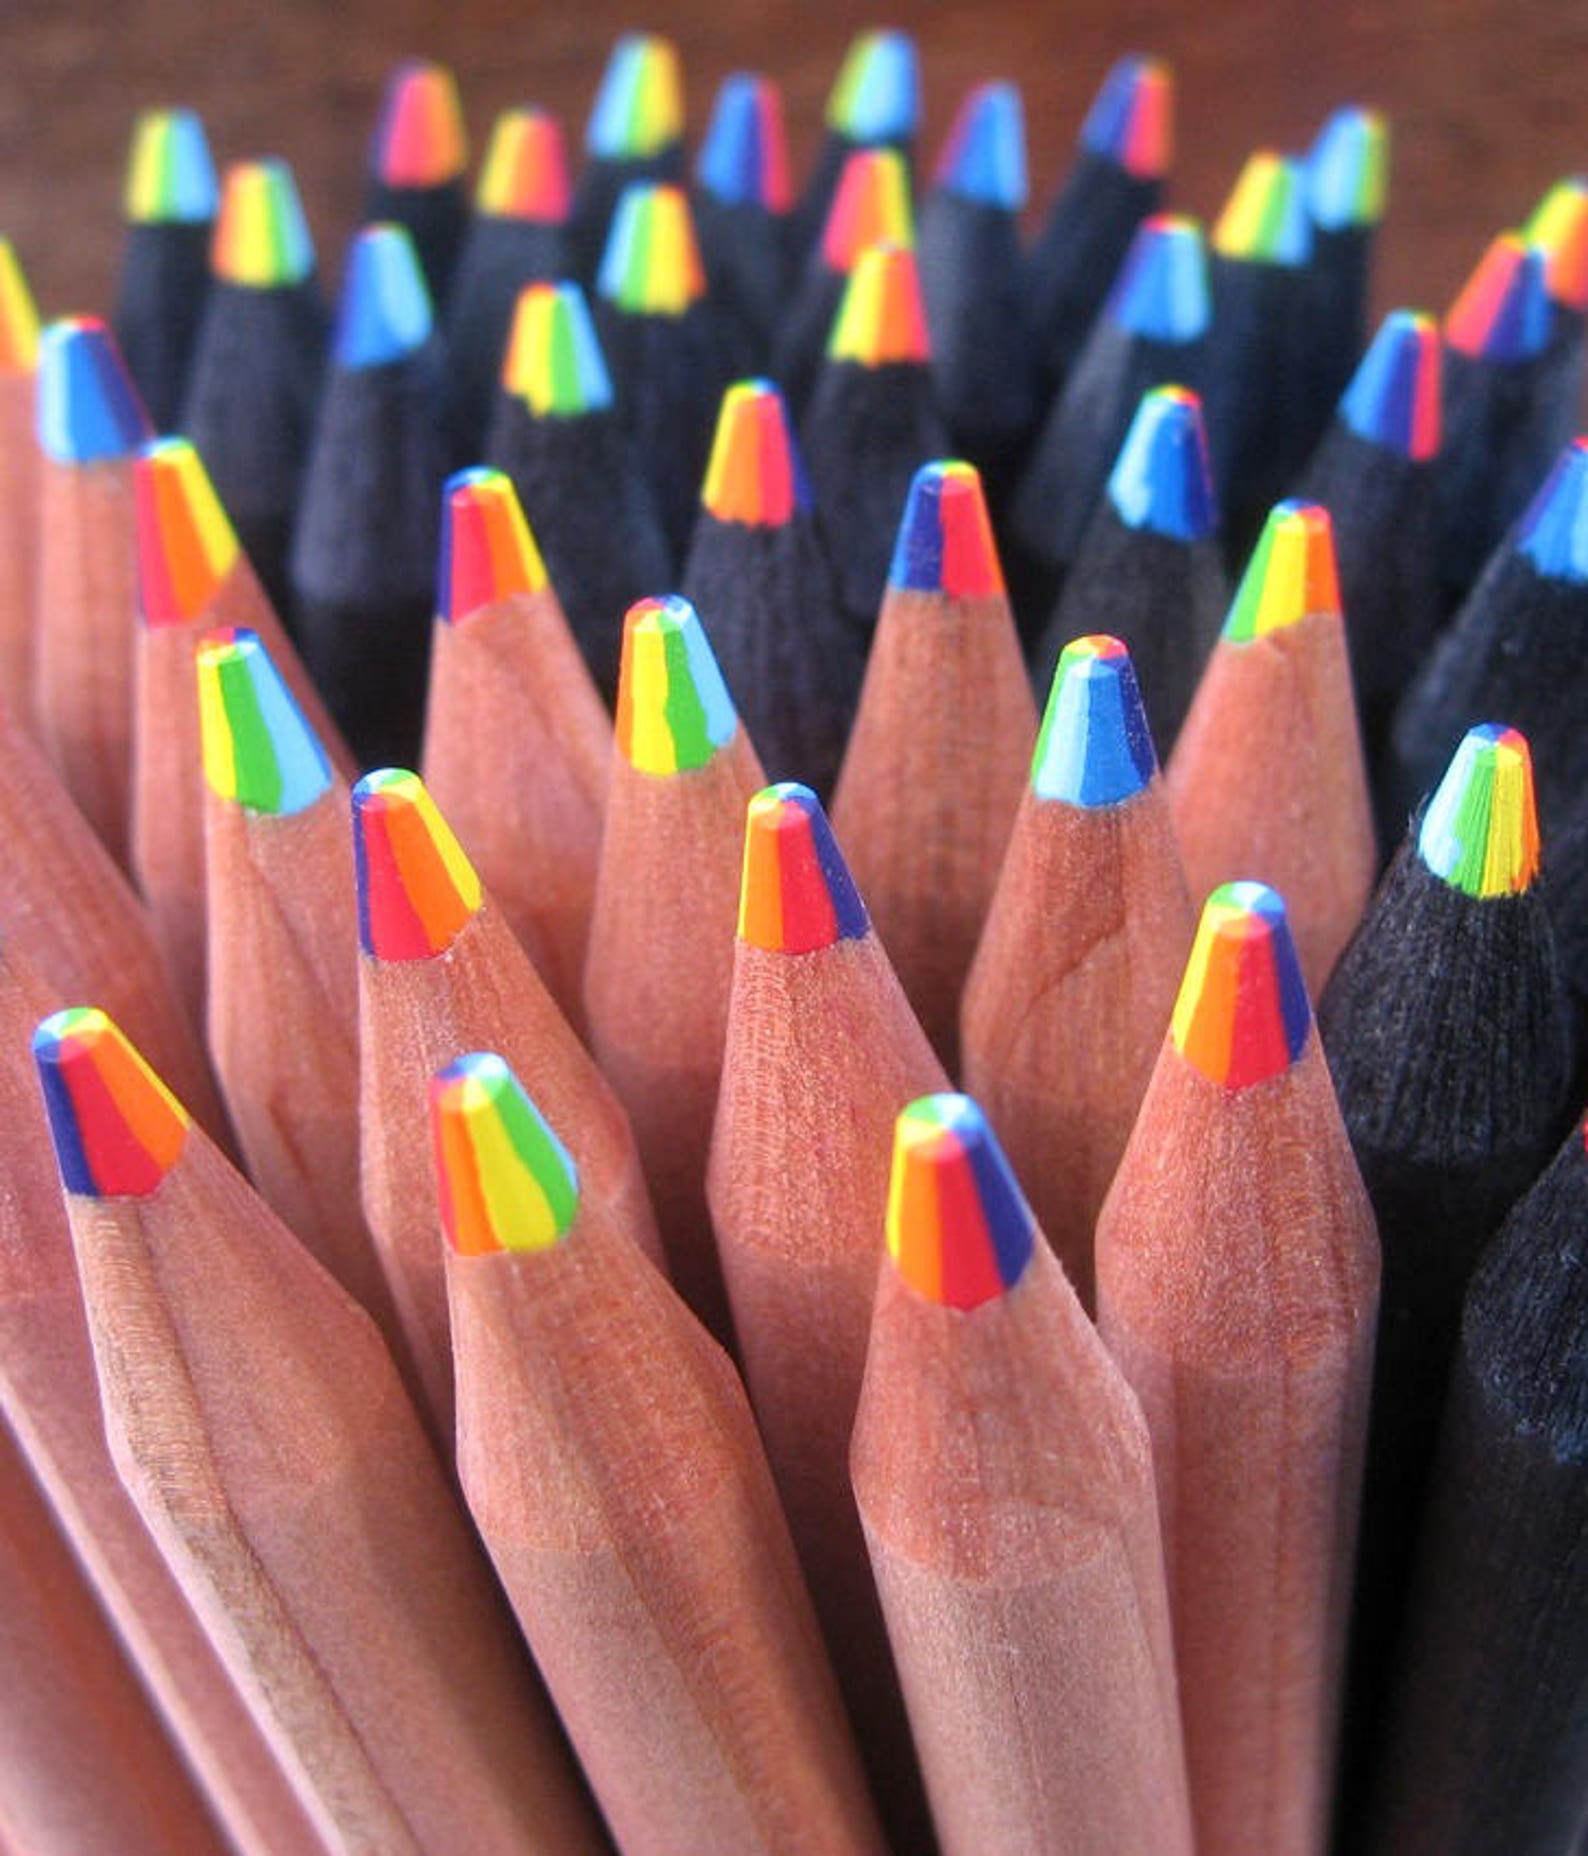 These your pencils. Радужные карандаши. Карандаш многоцветный. Цветные радужные карандаши. Яркие карандаши.